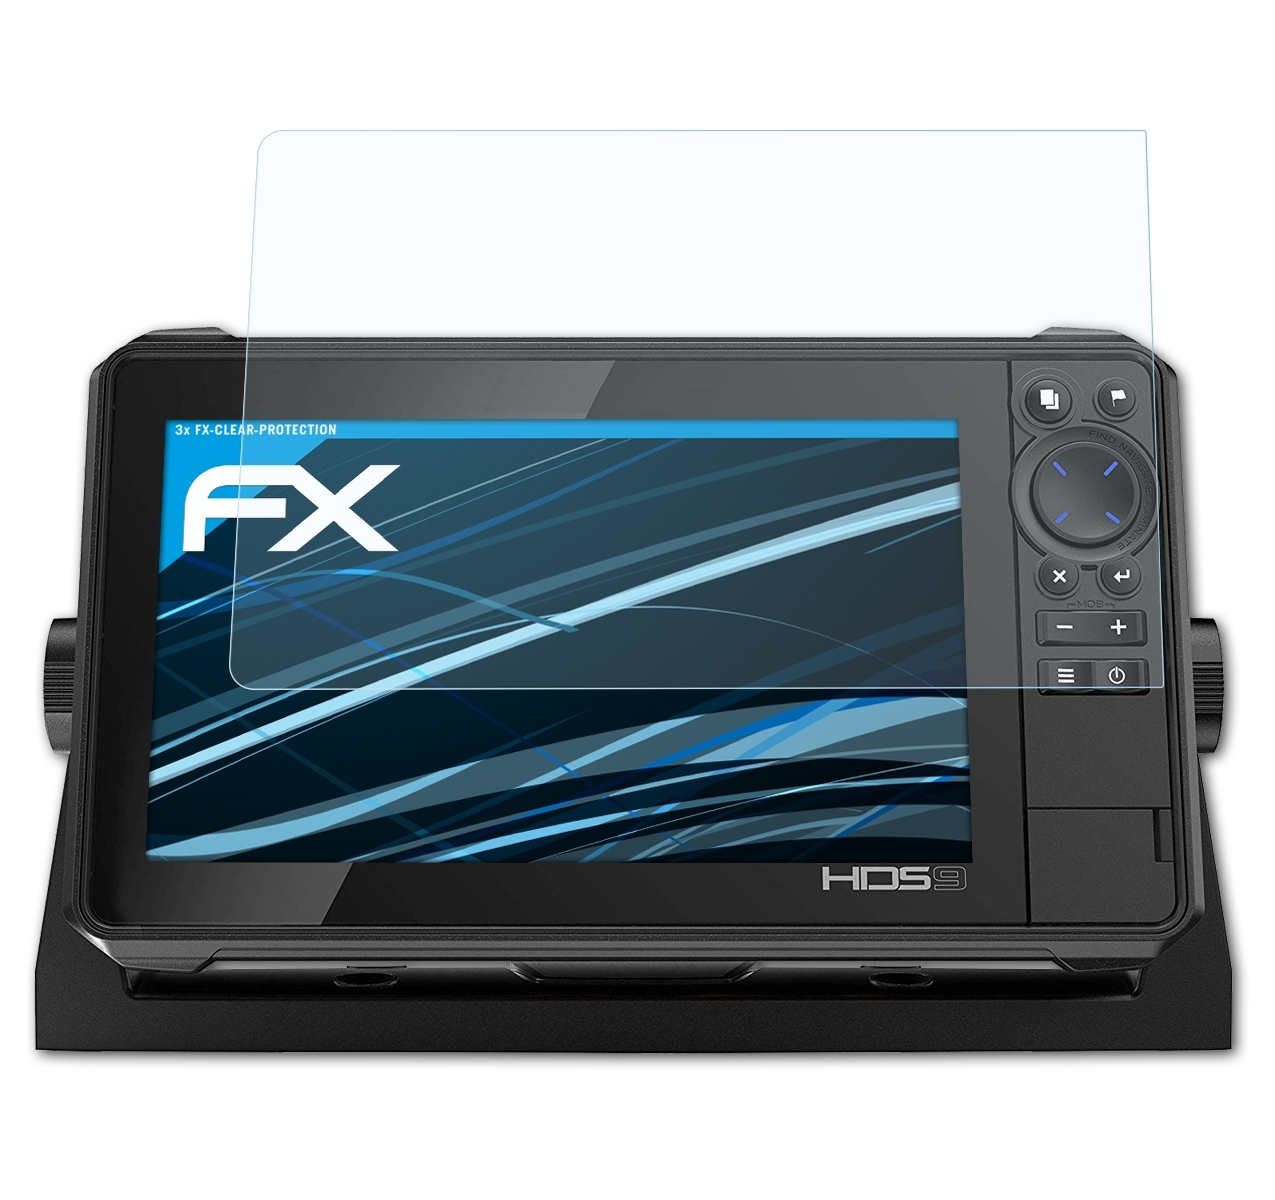 ATFOLIX 3x Lowrance FX-Clear Live 9) HDS Displayschutz(für